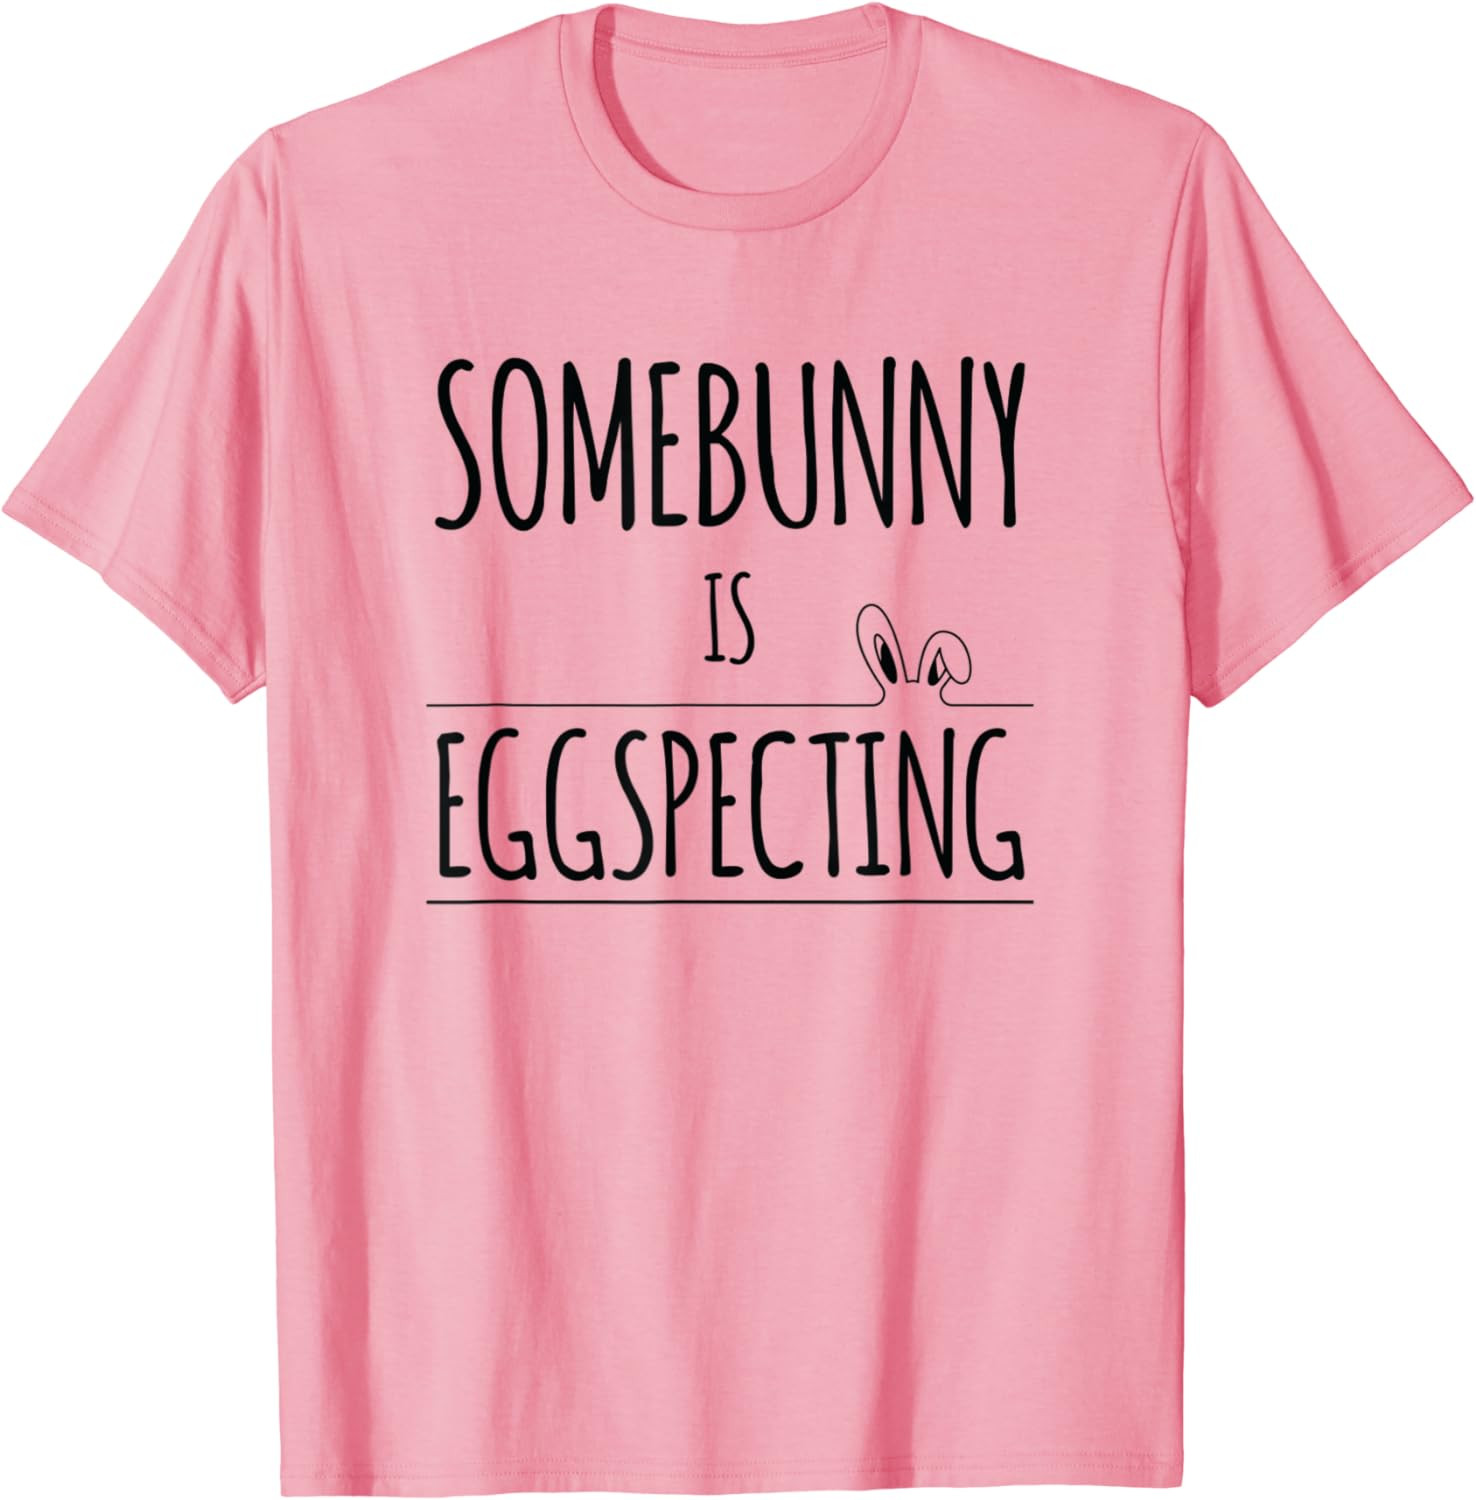 Somebunny Is Eggspecting Shirt Women Baby Bunny Announcement T-Shirt